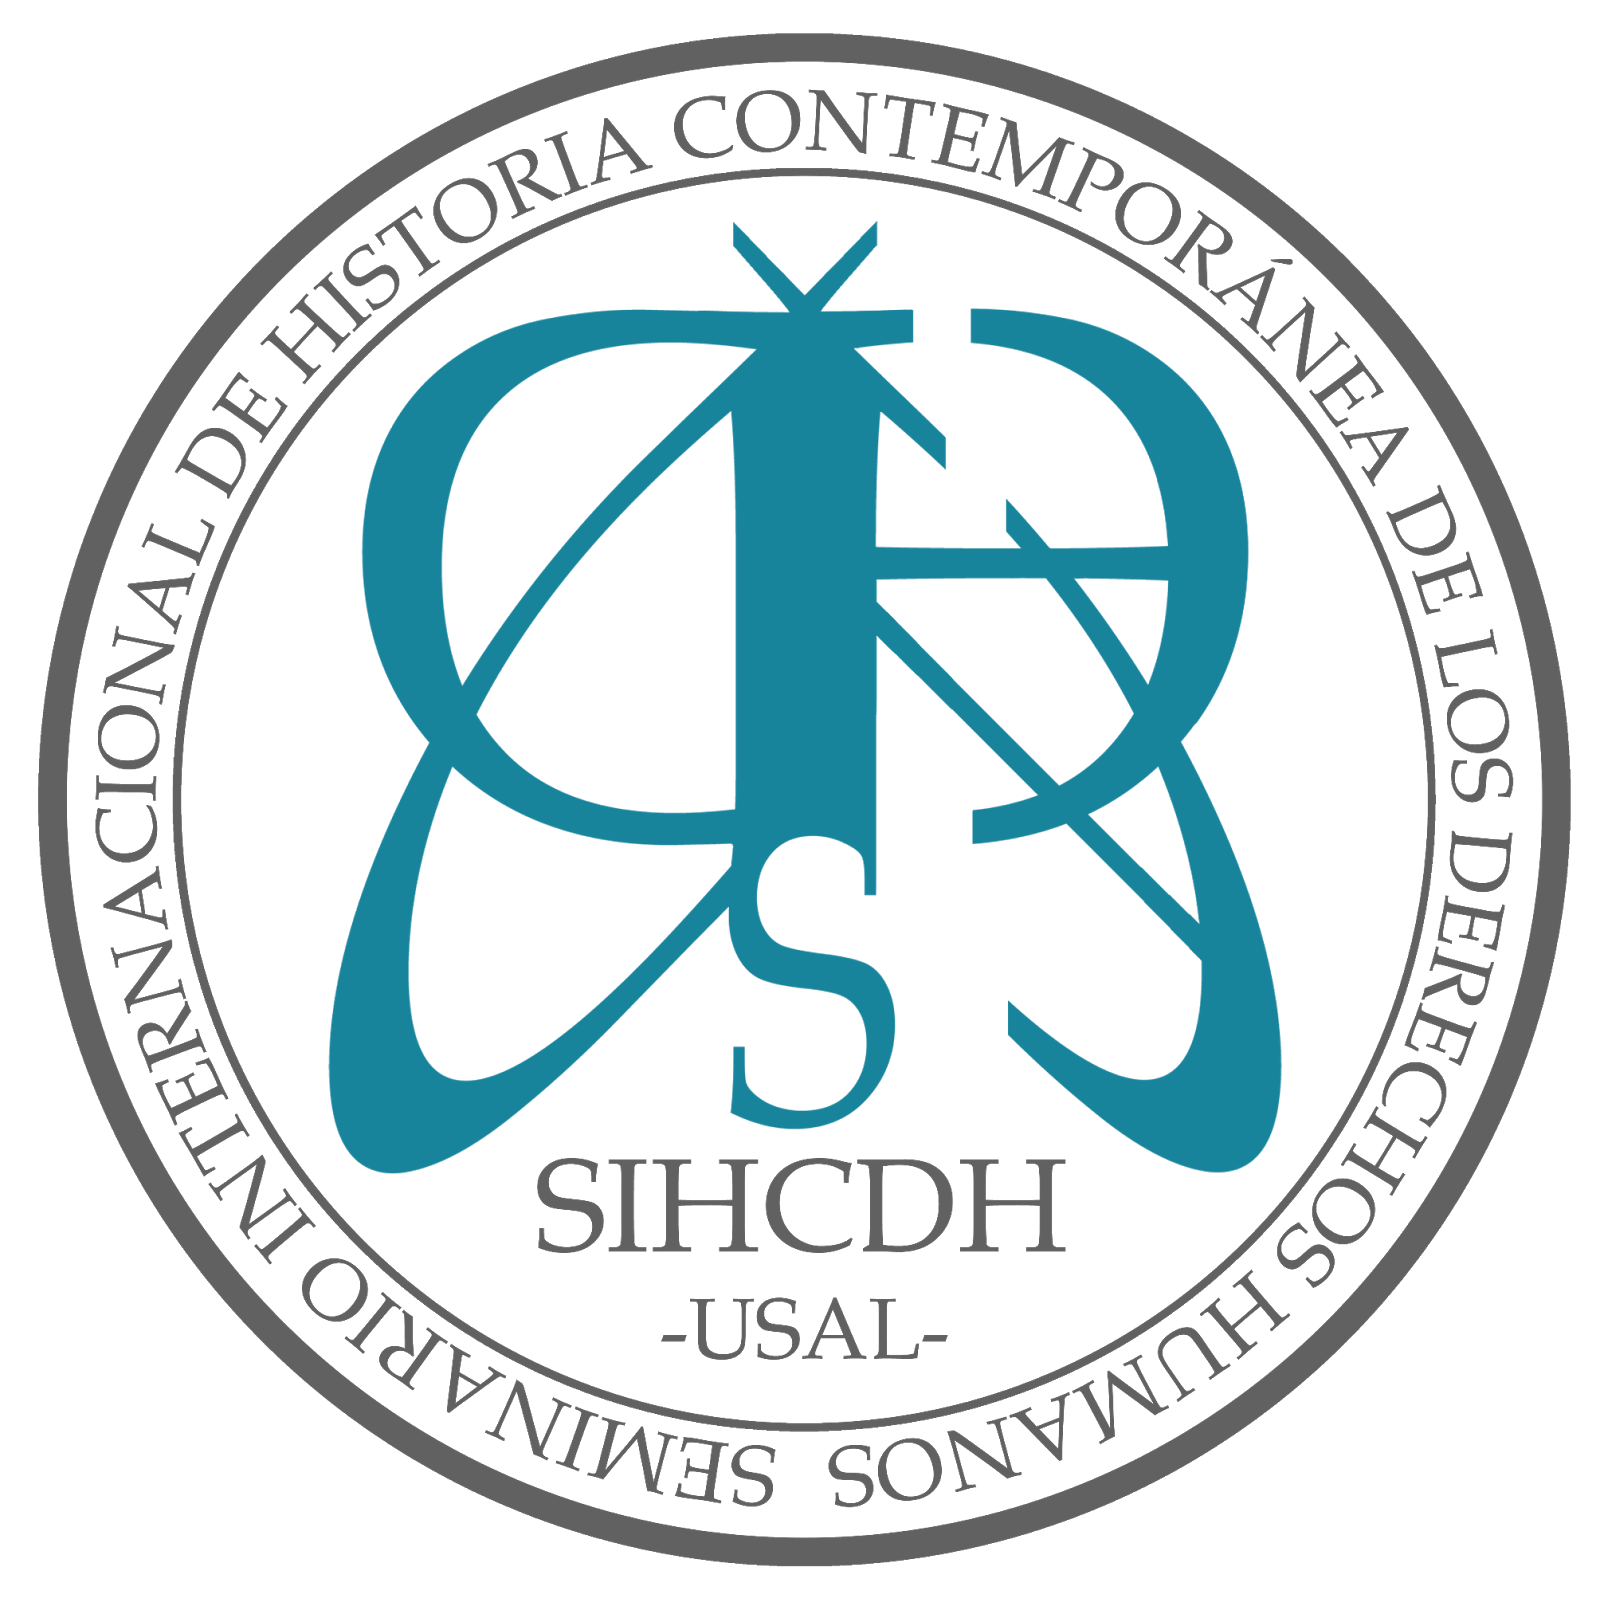 SIHCDH/USAL